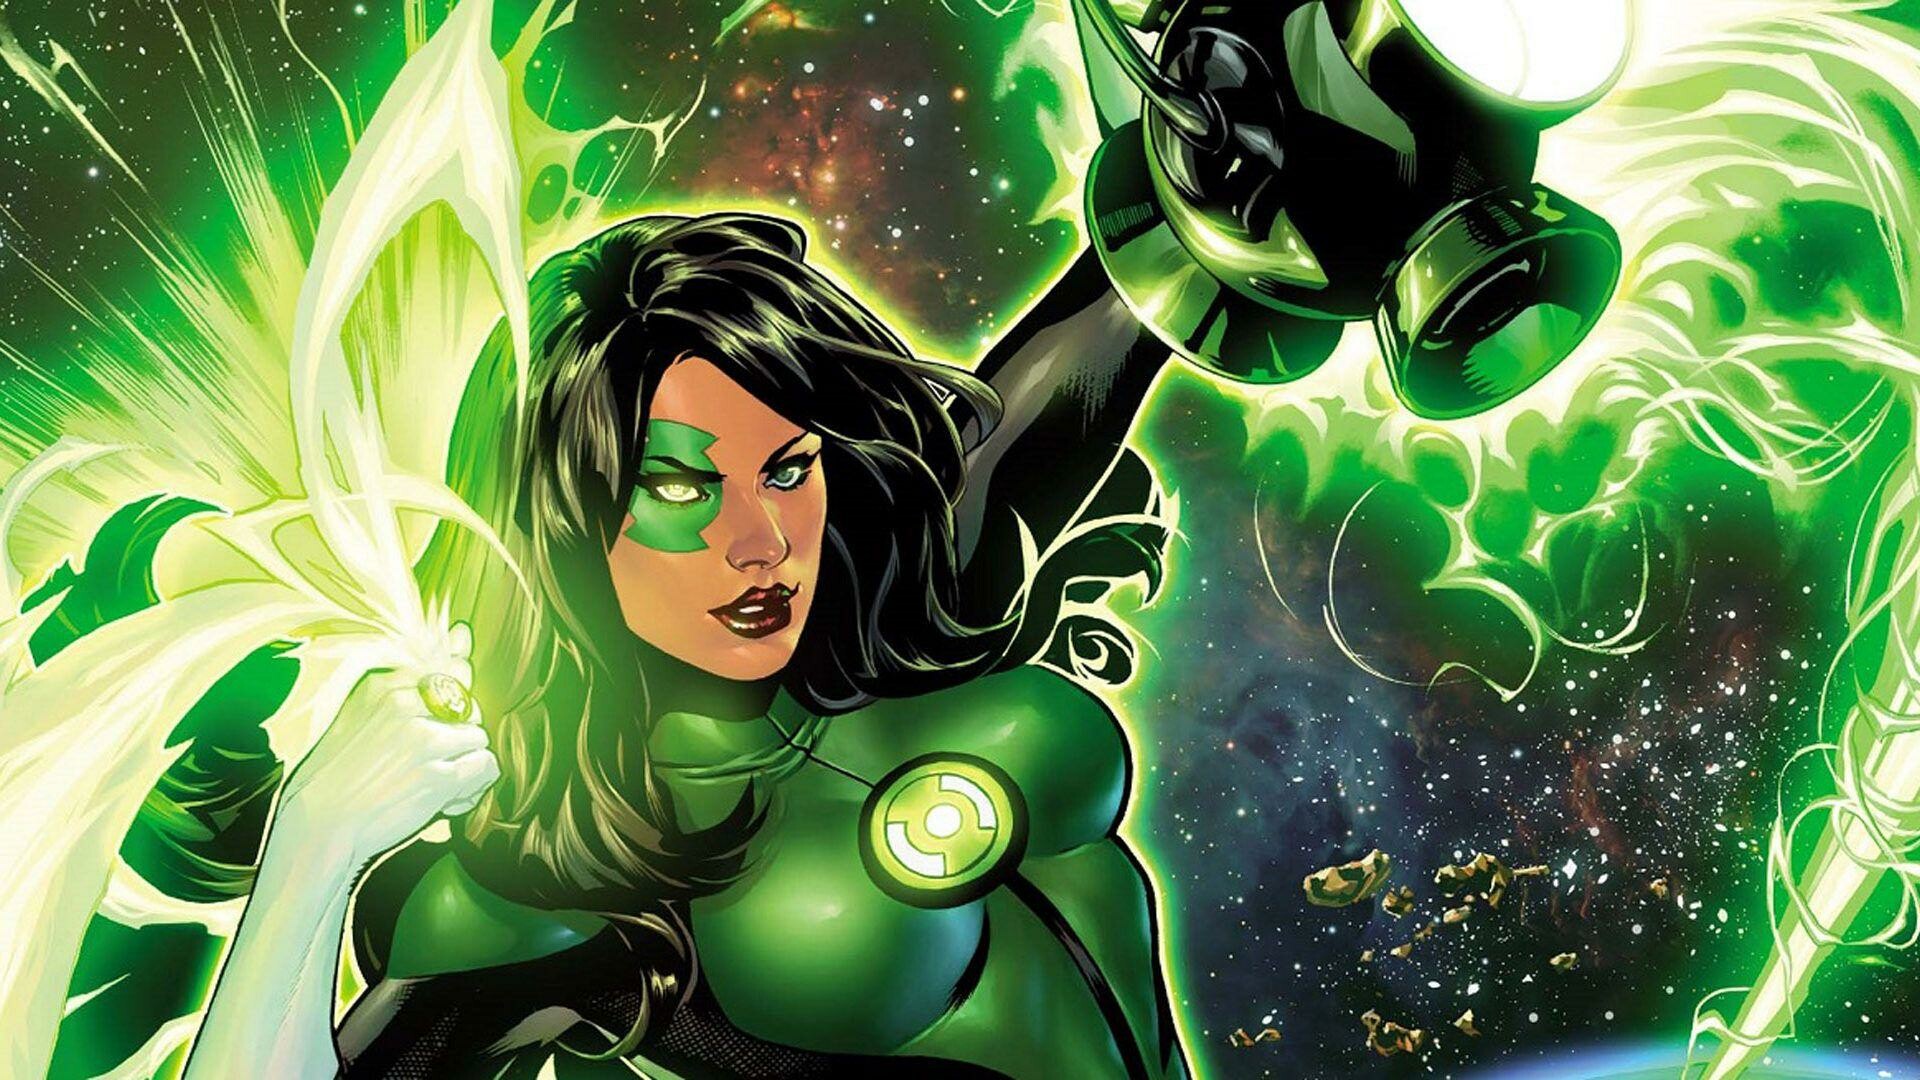 Green Lantern: Jessica Cruz, A superheroine appearing in American comic books published by DC Comics. 1920x1080 Full HD Background.